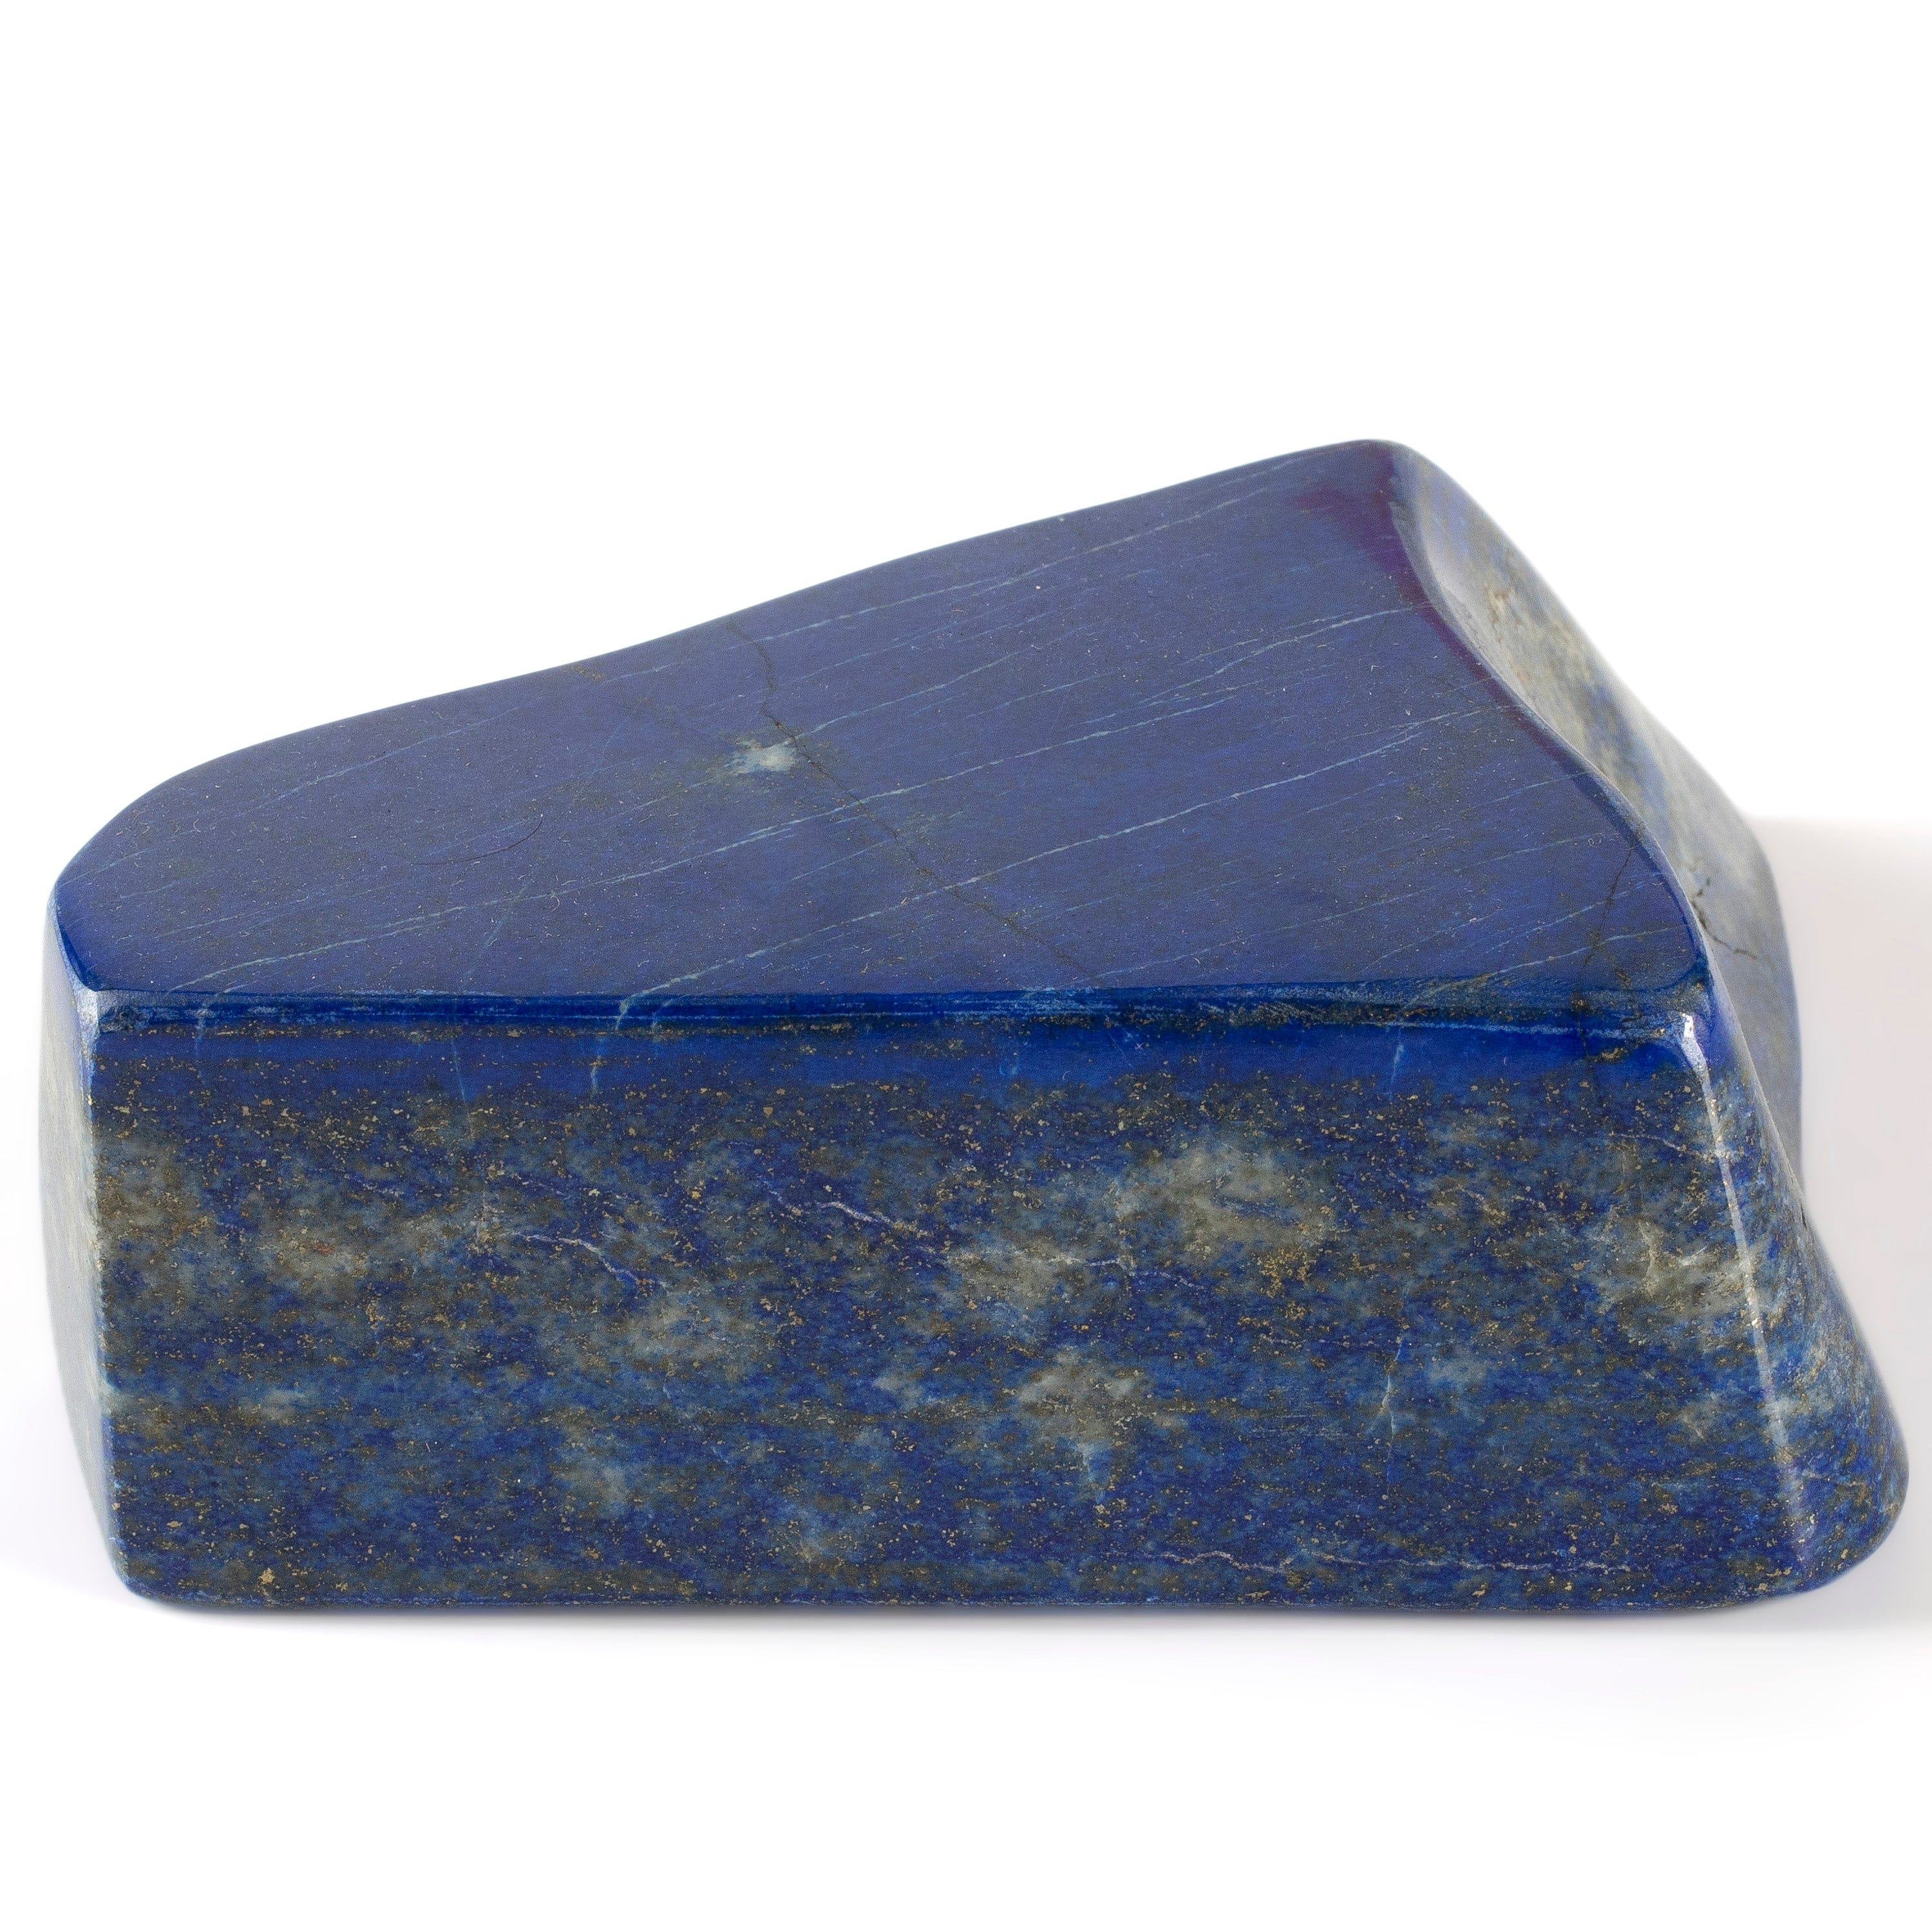 Kalifano Lapis Lapis Lazuli Freeform from Afghanistan - 6" / 1,580 grams LP1600.004